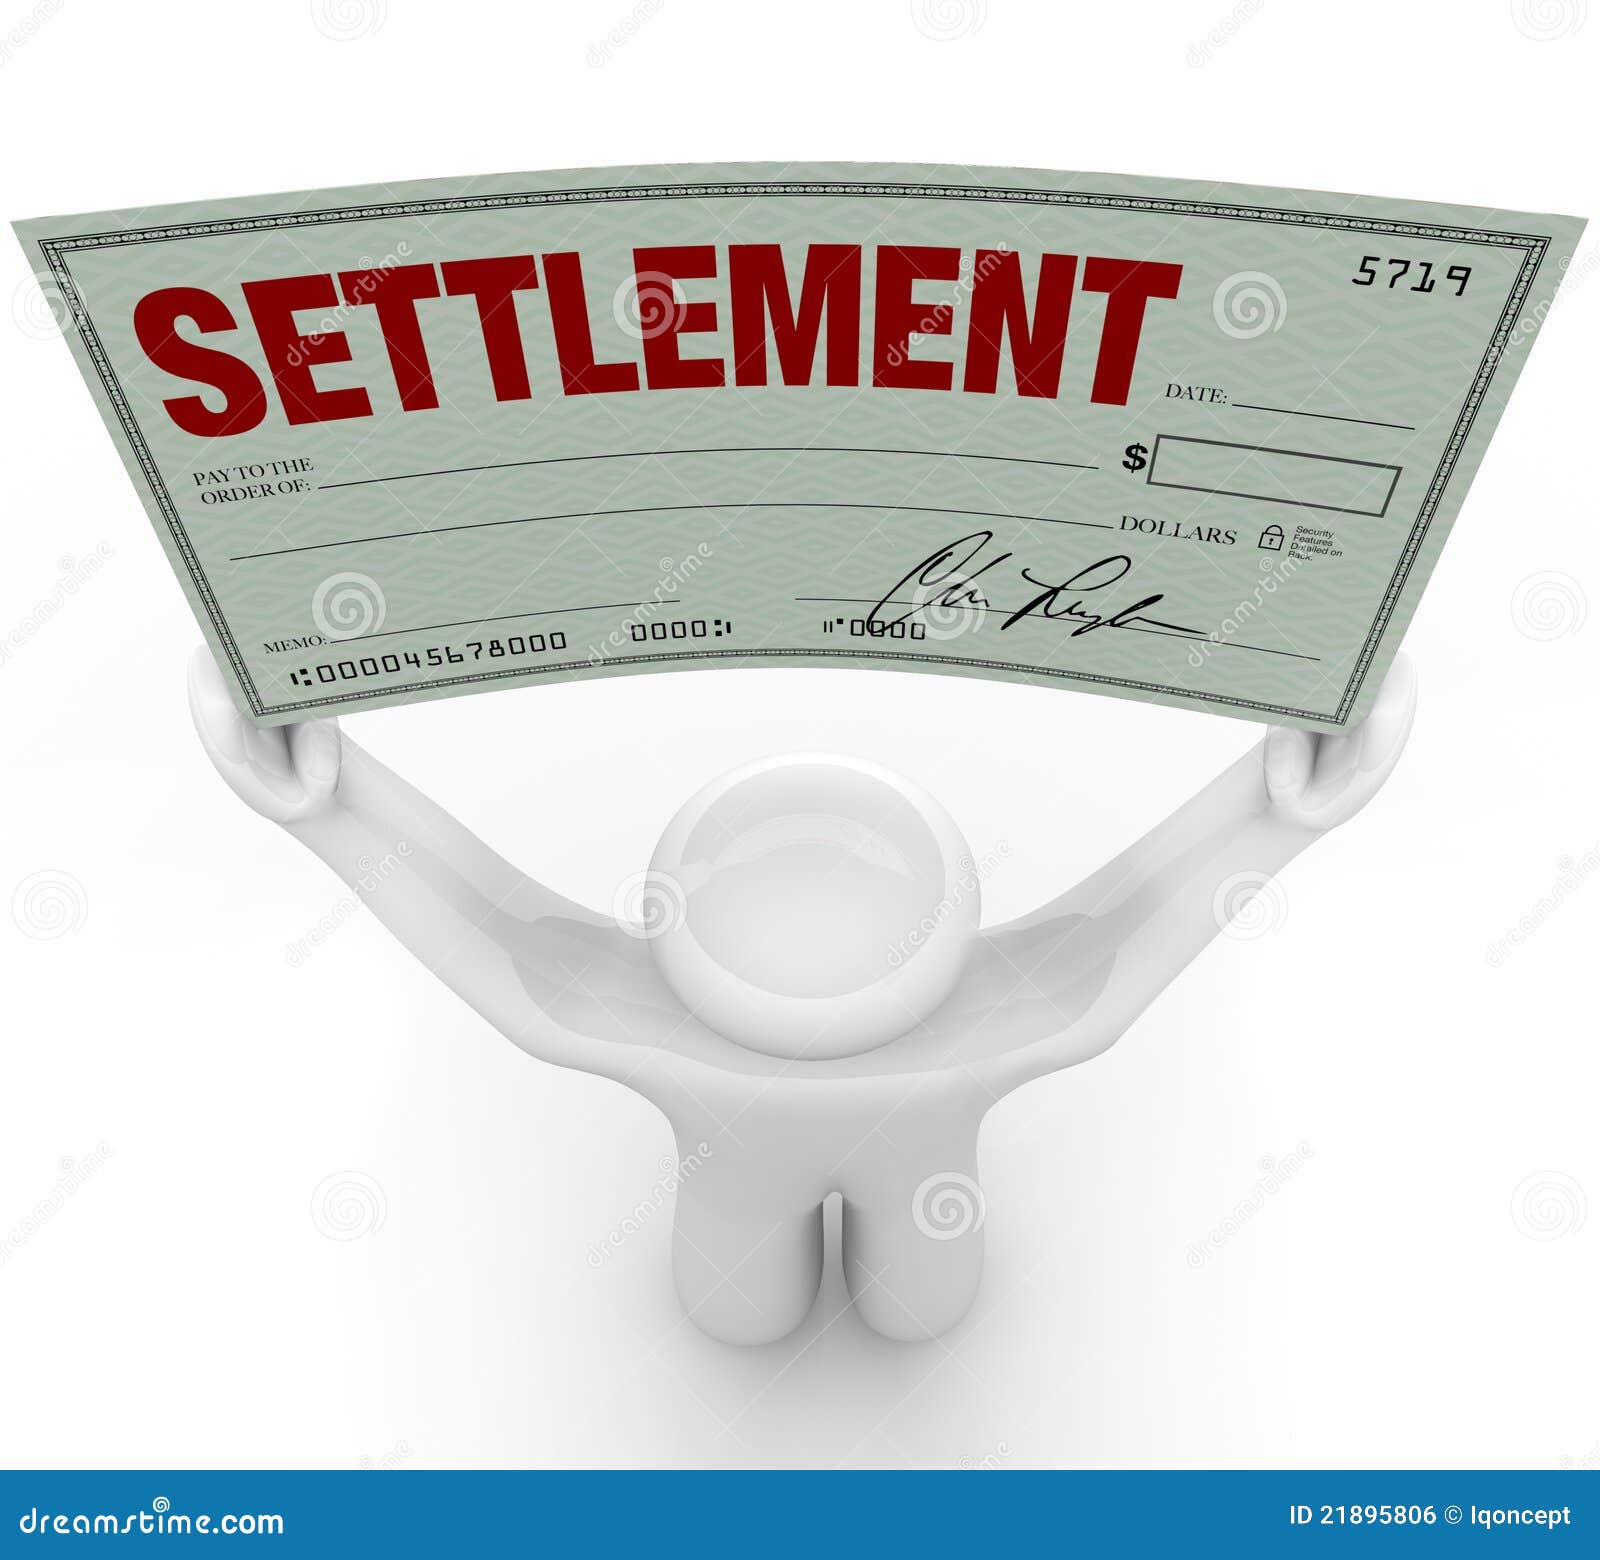 man holding big settlement check agreement money